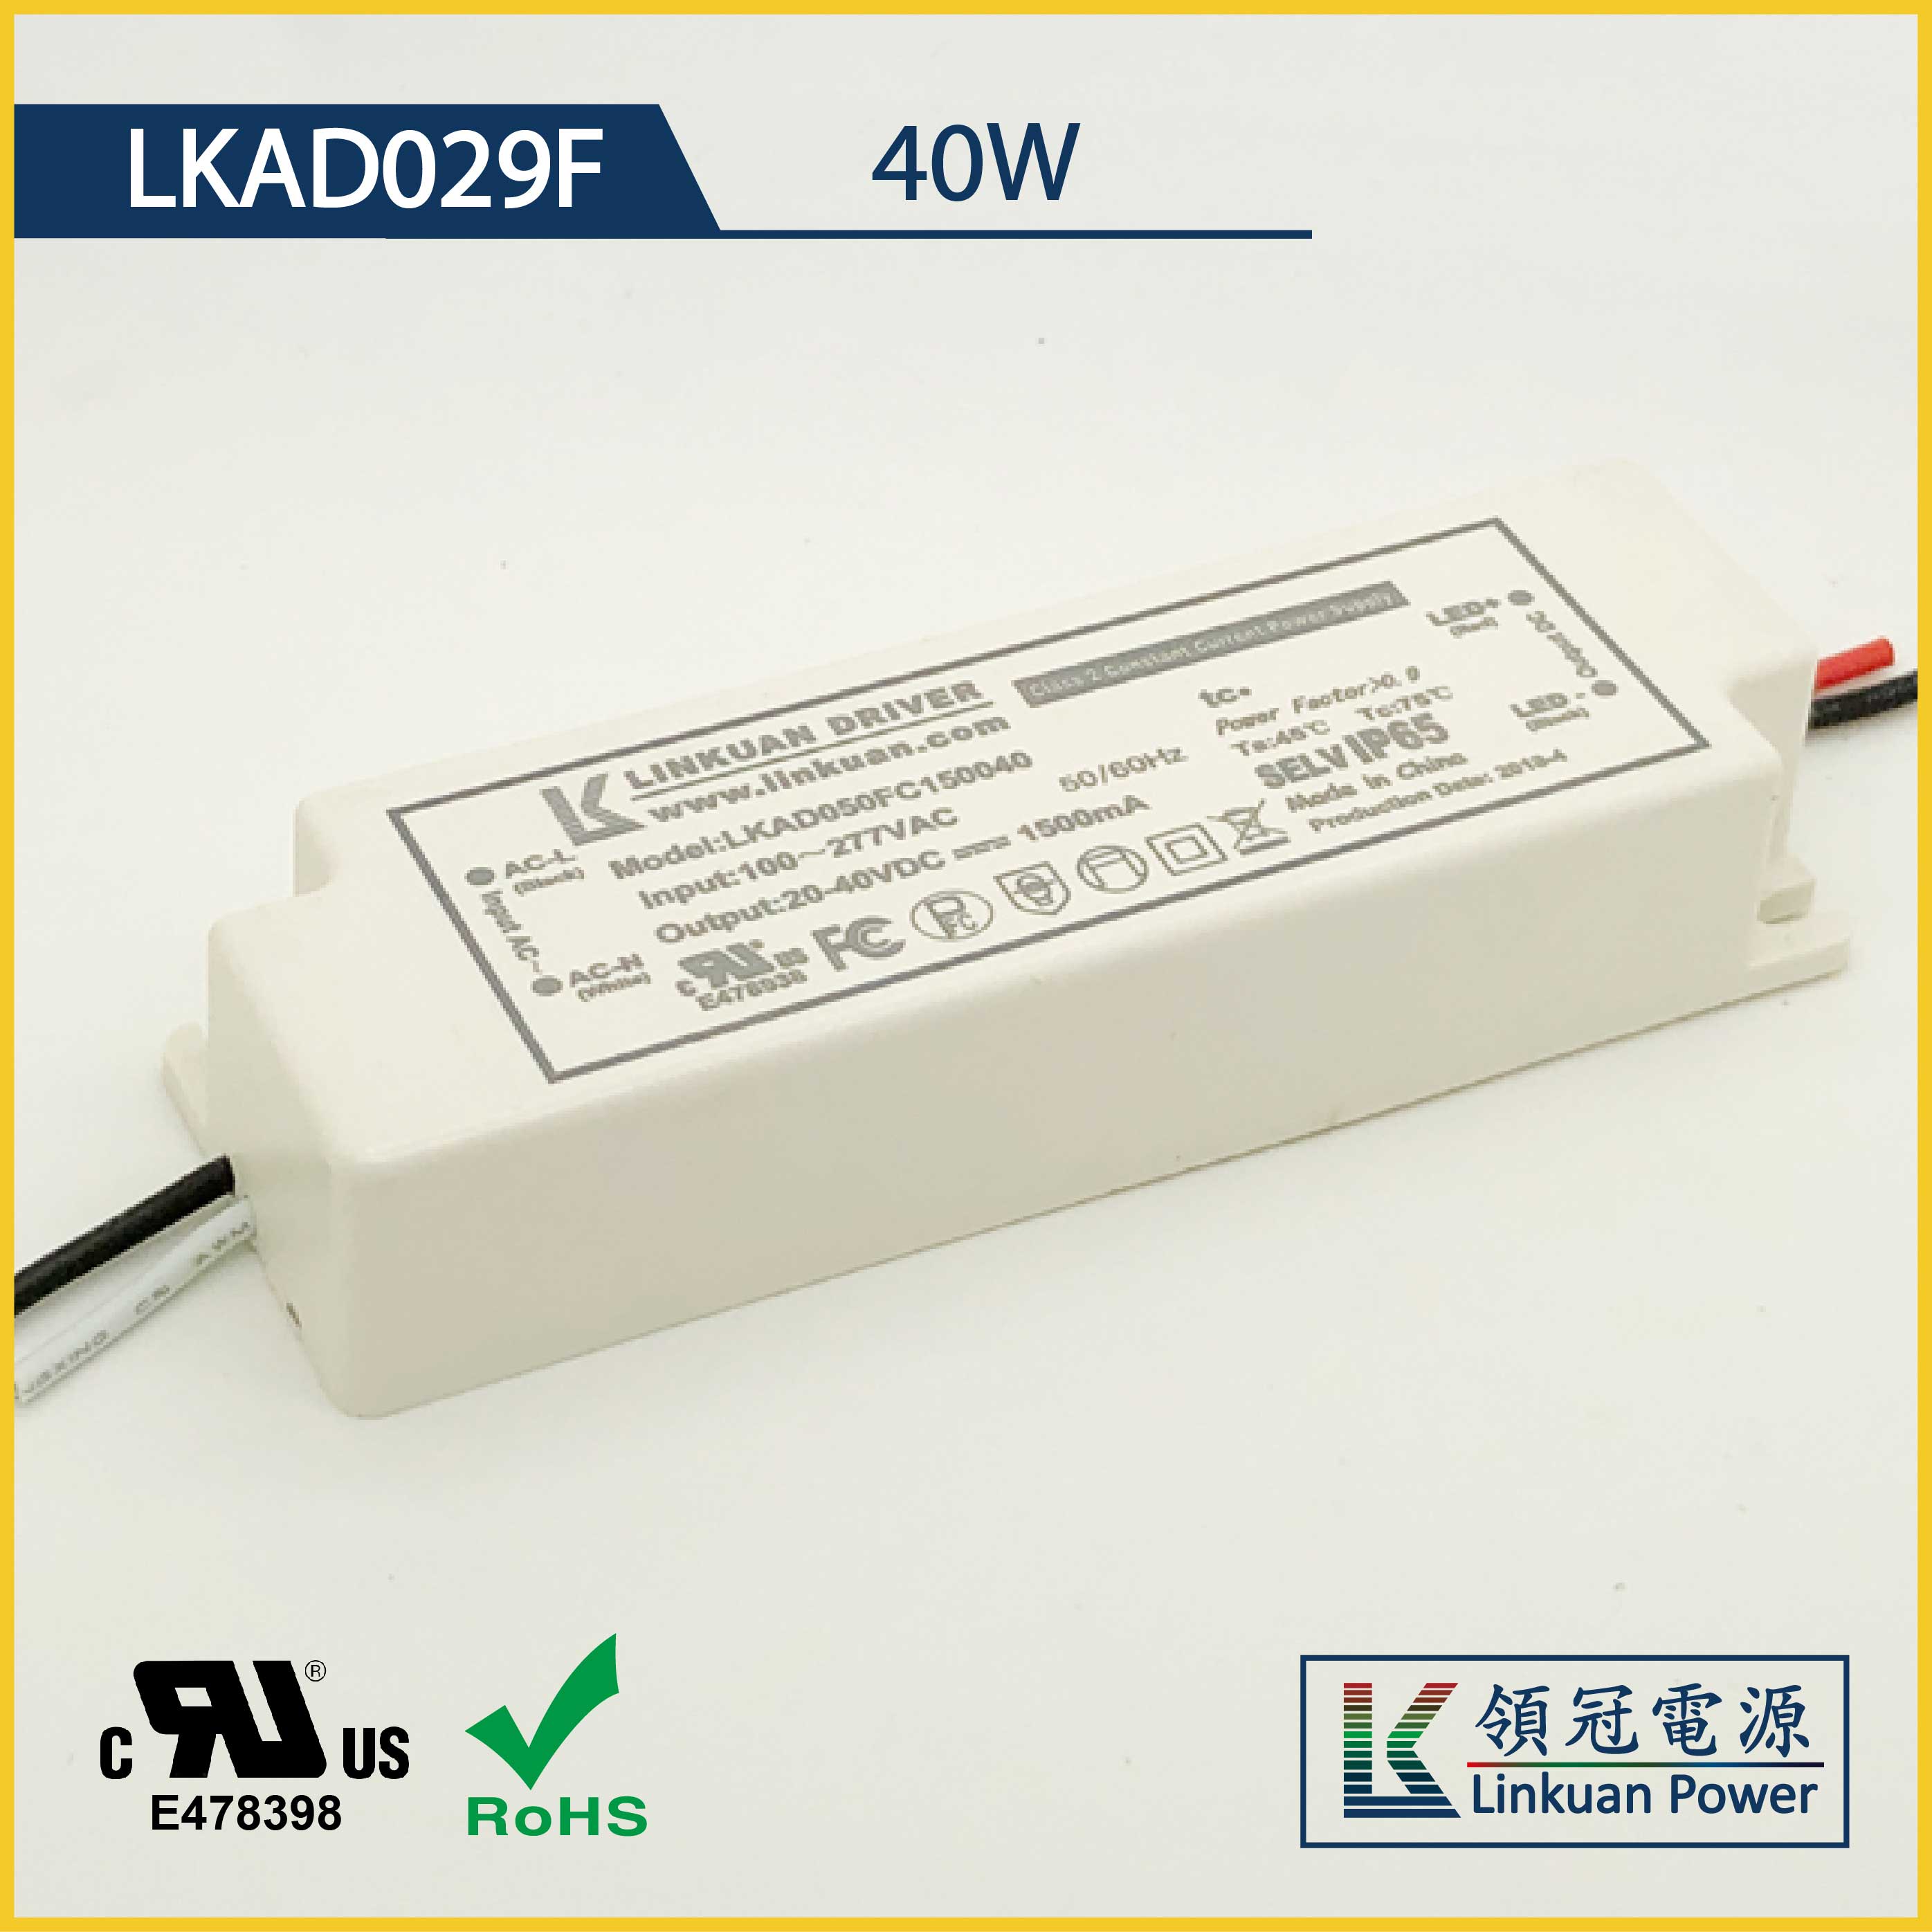 LKAD050F 60W 18-40V 1500mA LED drivers